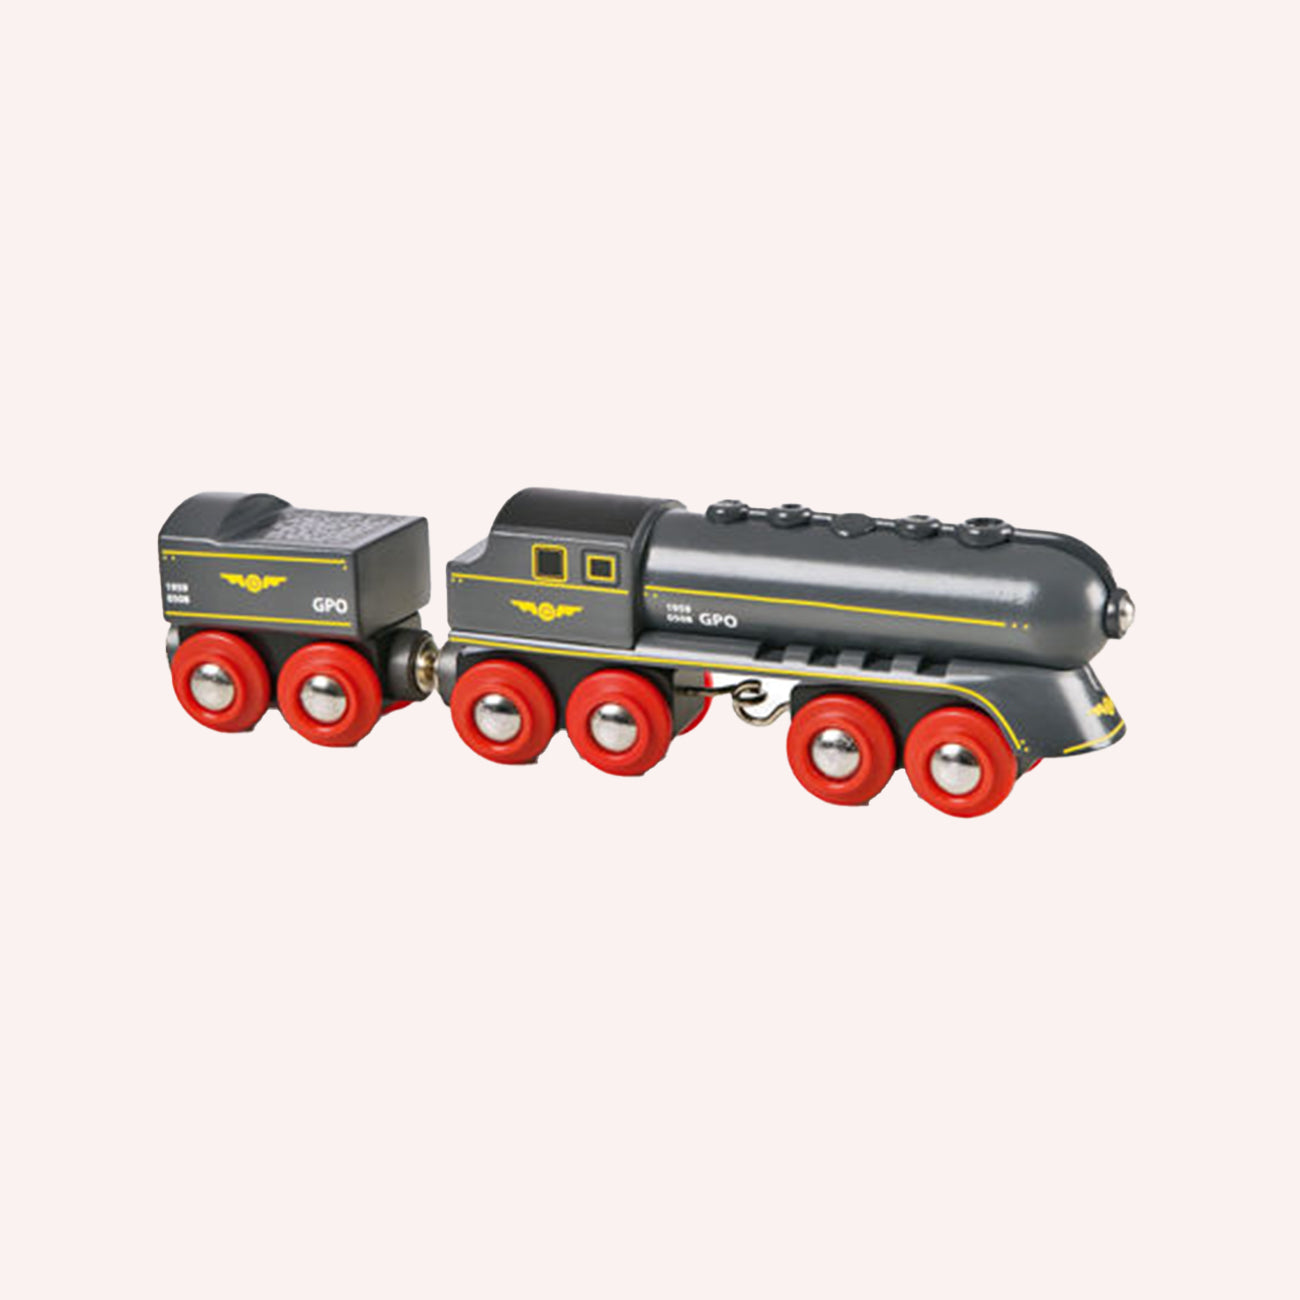 Speedy Bullet Train - 2 pieces